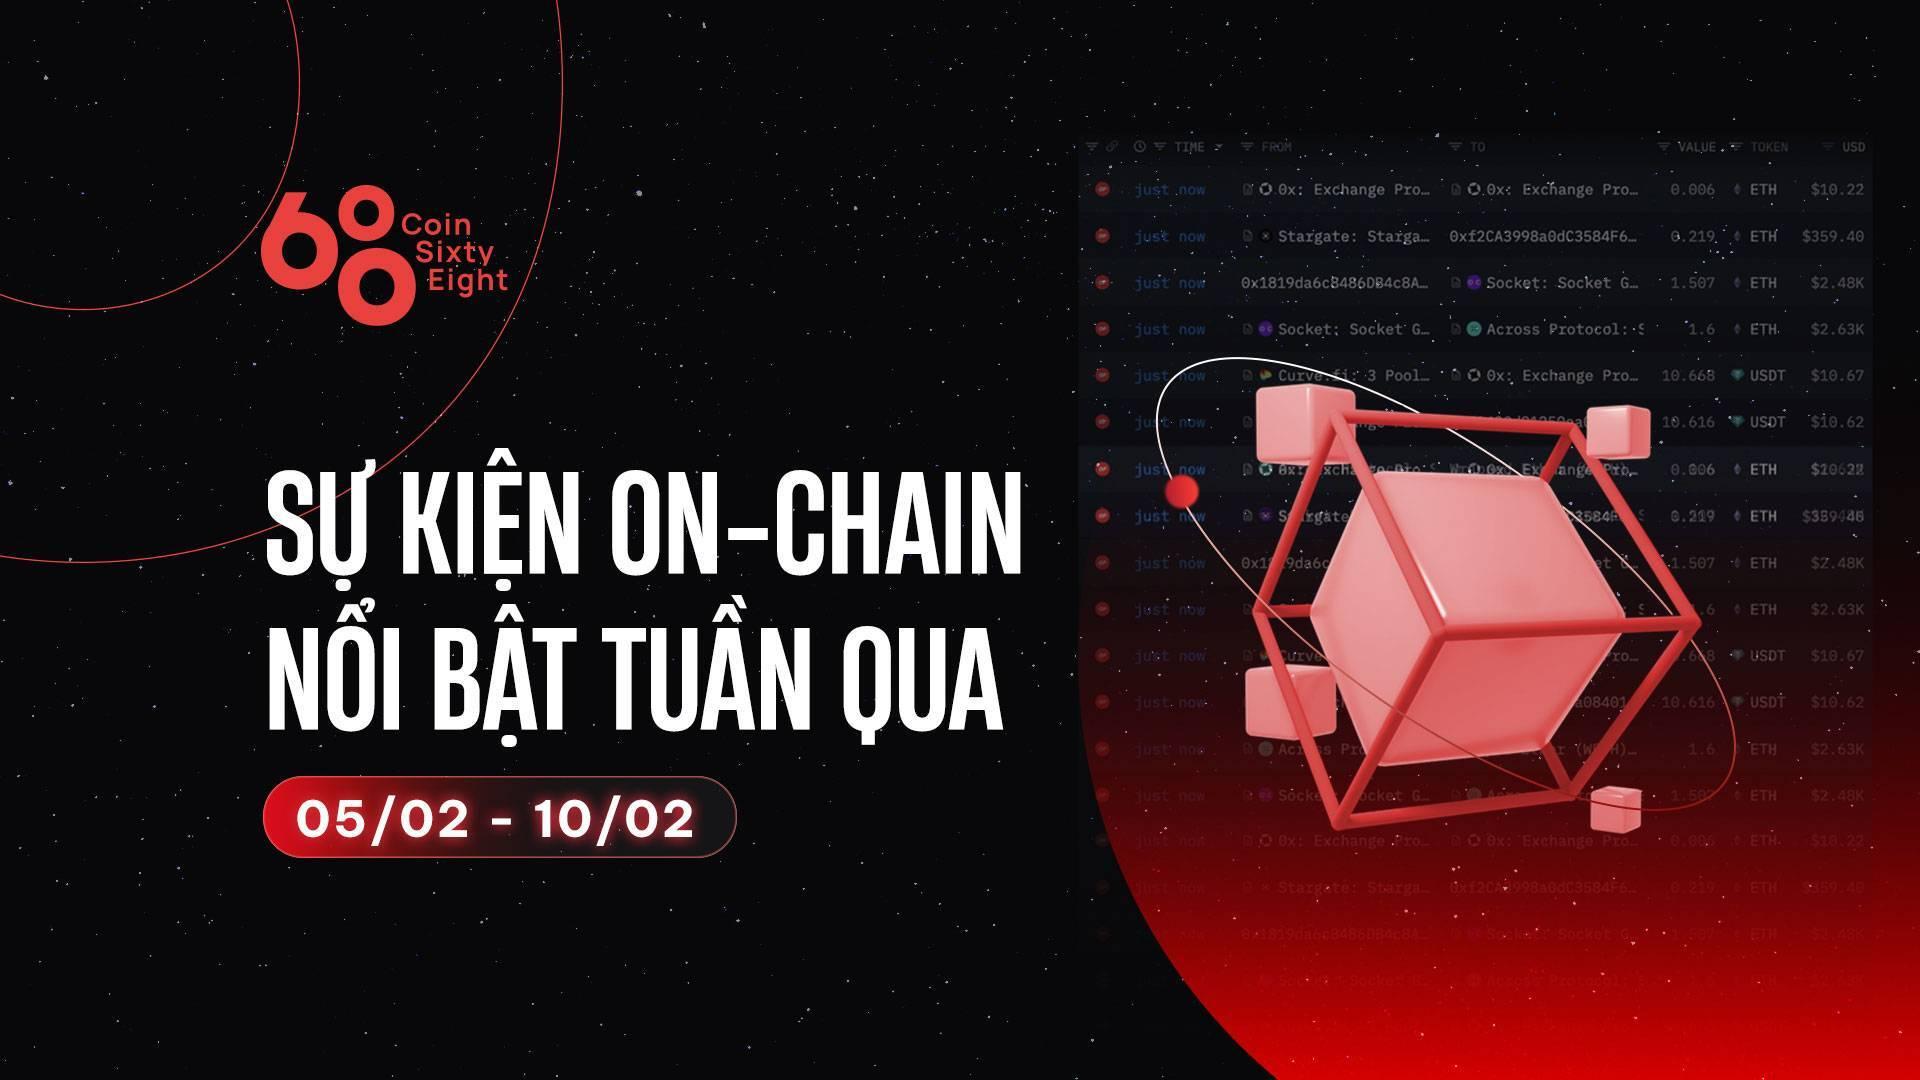 su-kien-on-chain-noi-bat-tuan-qua-1202-1702-so-luoc-tang-truong-starknet-diem-nhan-on-chain-tu-the-block-dong-tien-vao-etf-bitcoin-tang-khong-ngung